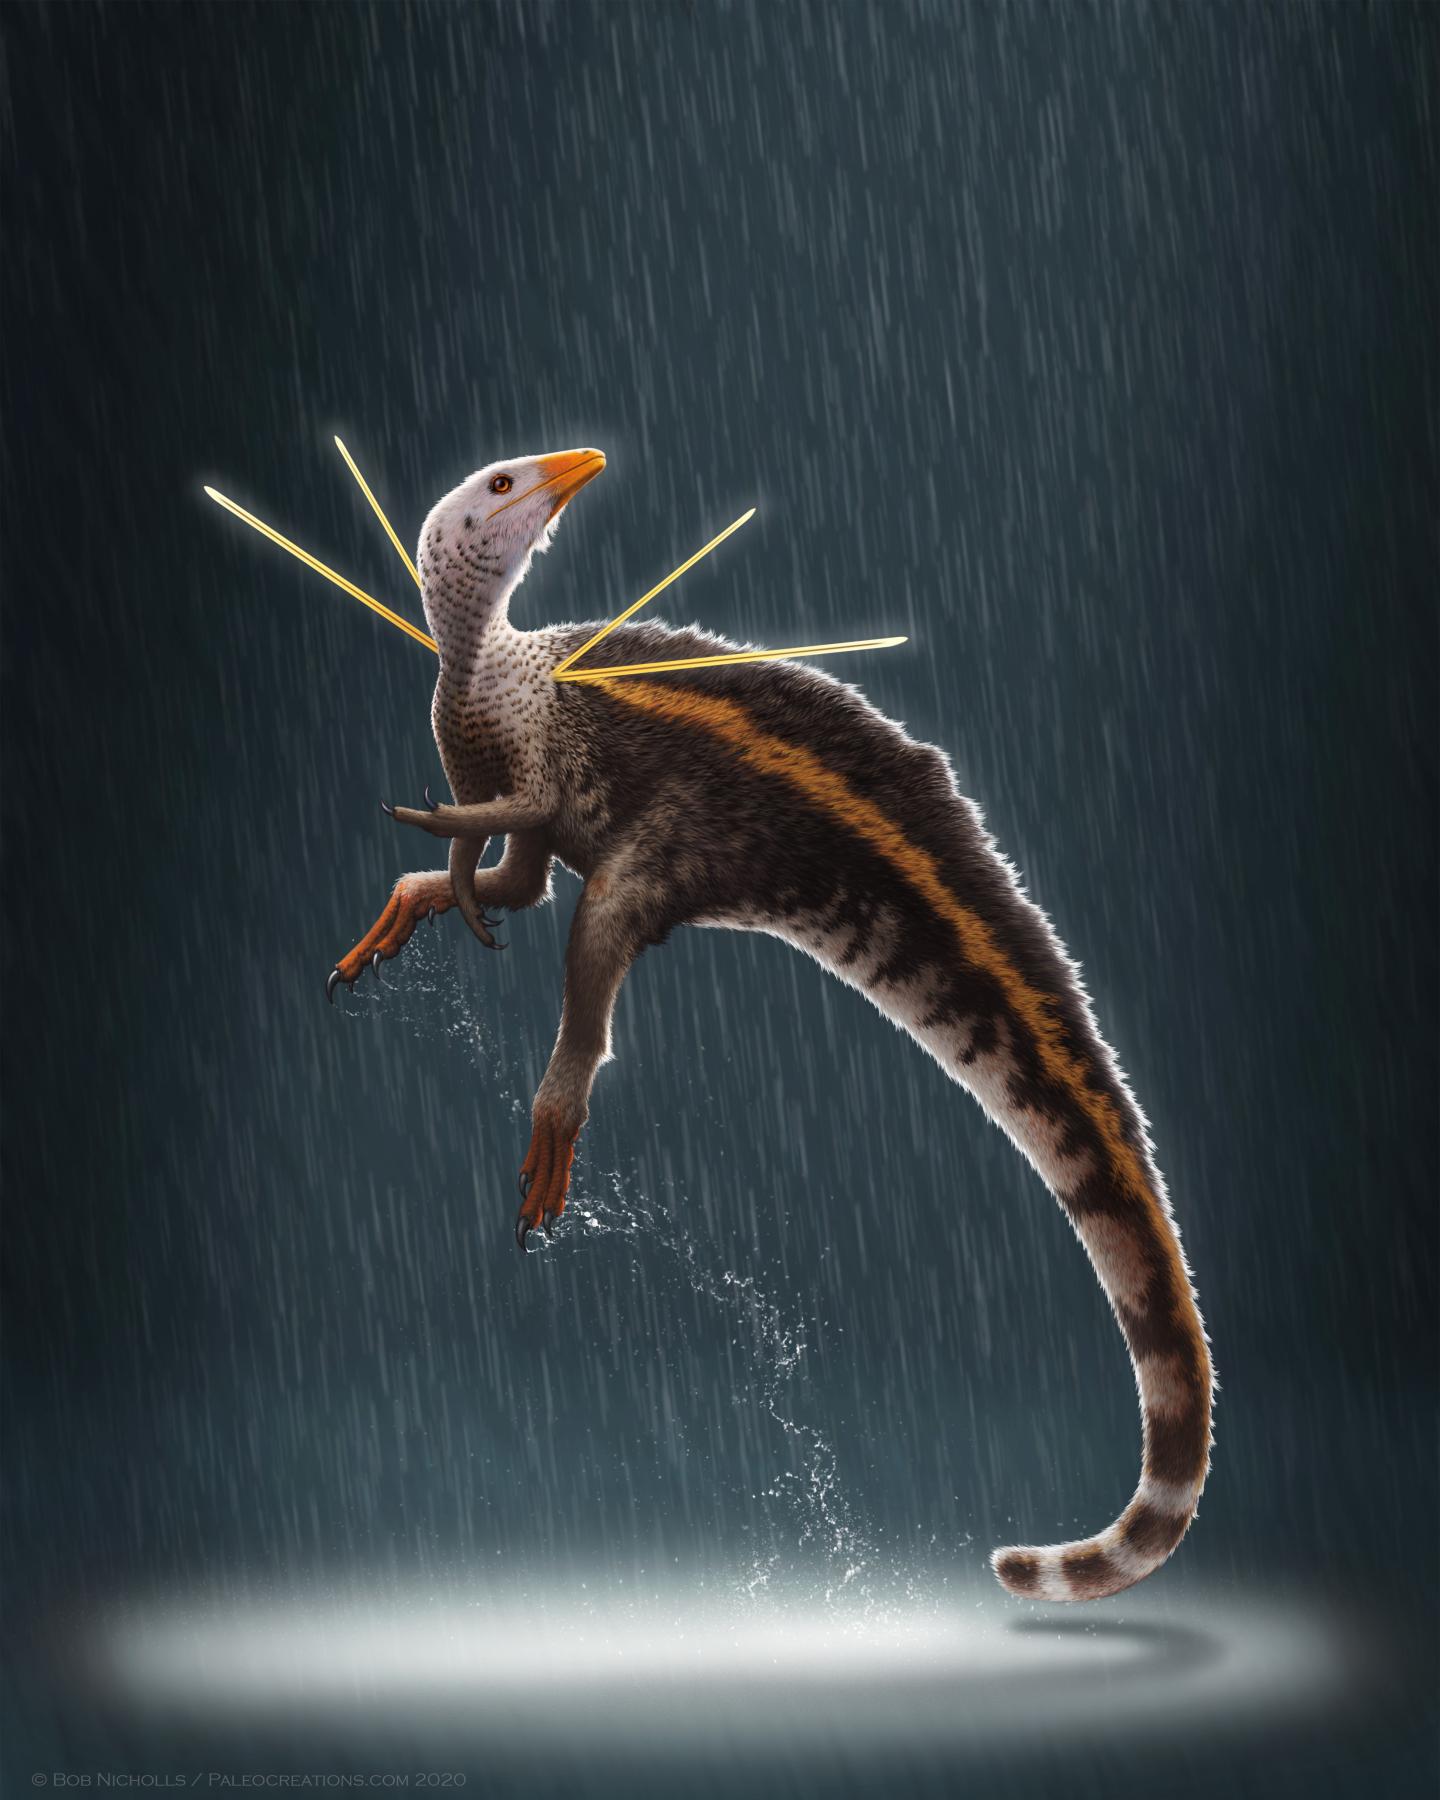 Artist's impression of Ubirajara jubatus. (© Bob Nicholls / Paleocreations.com 2020)